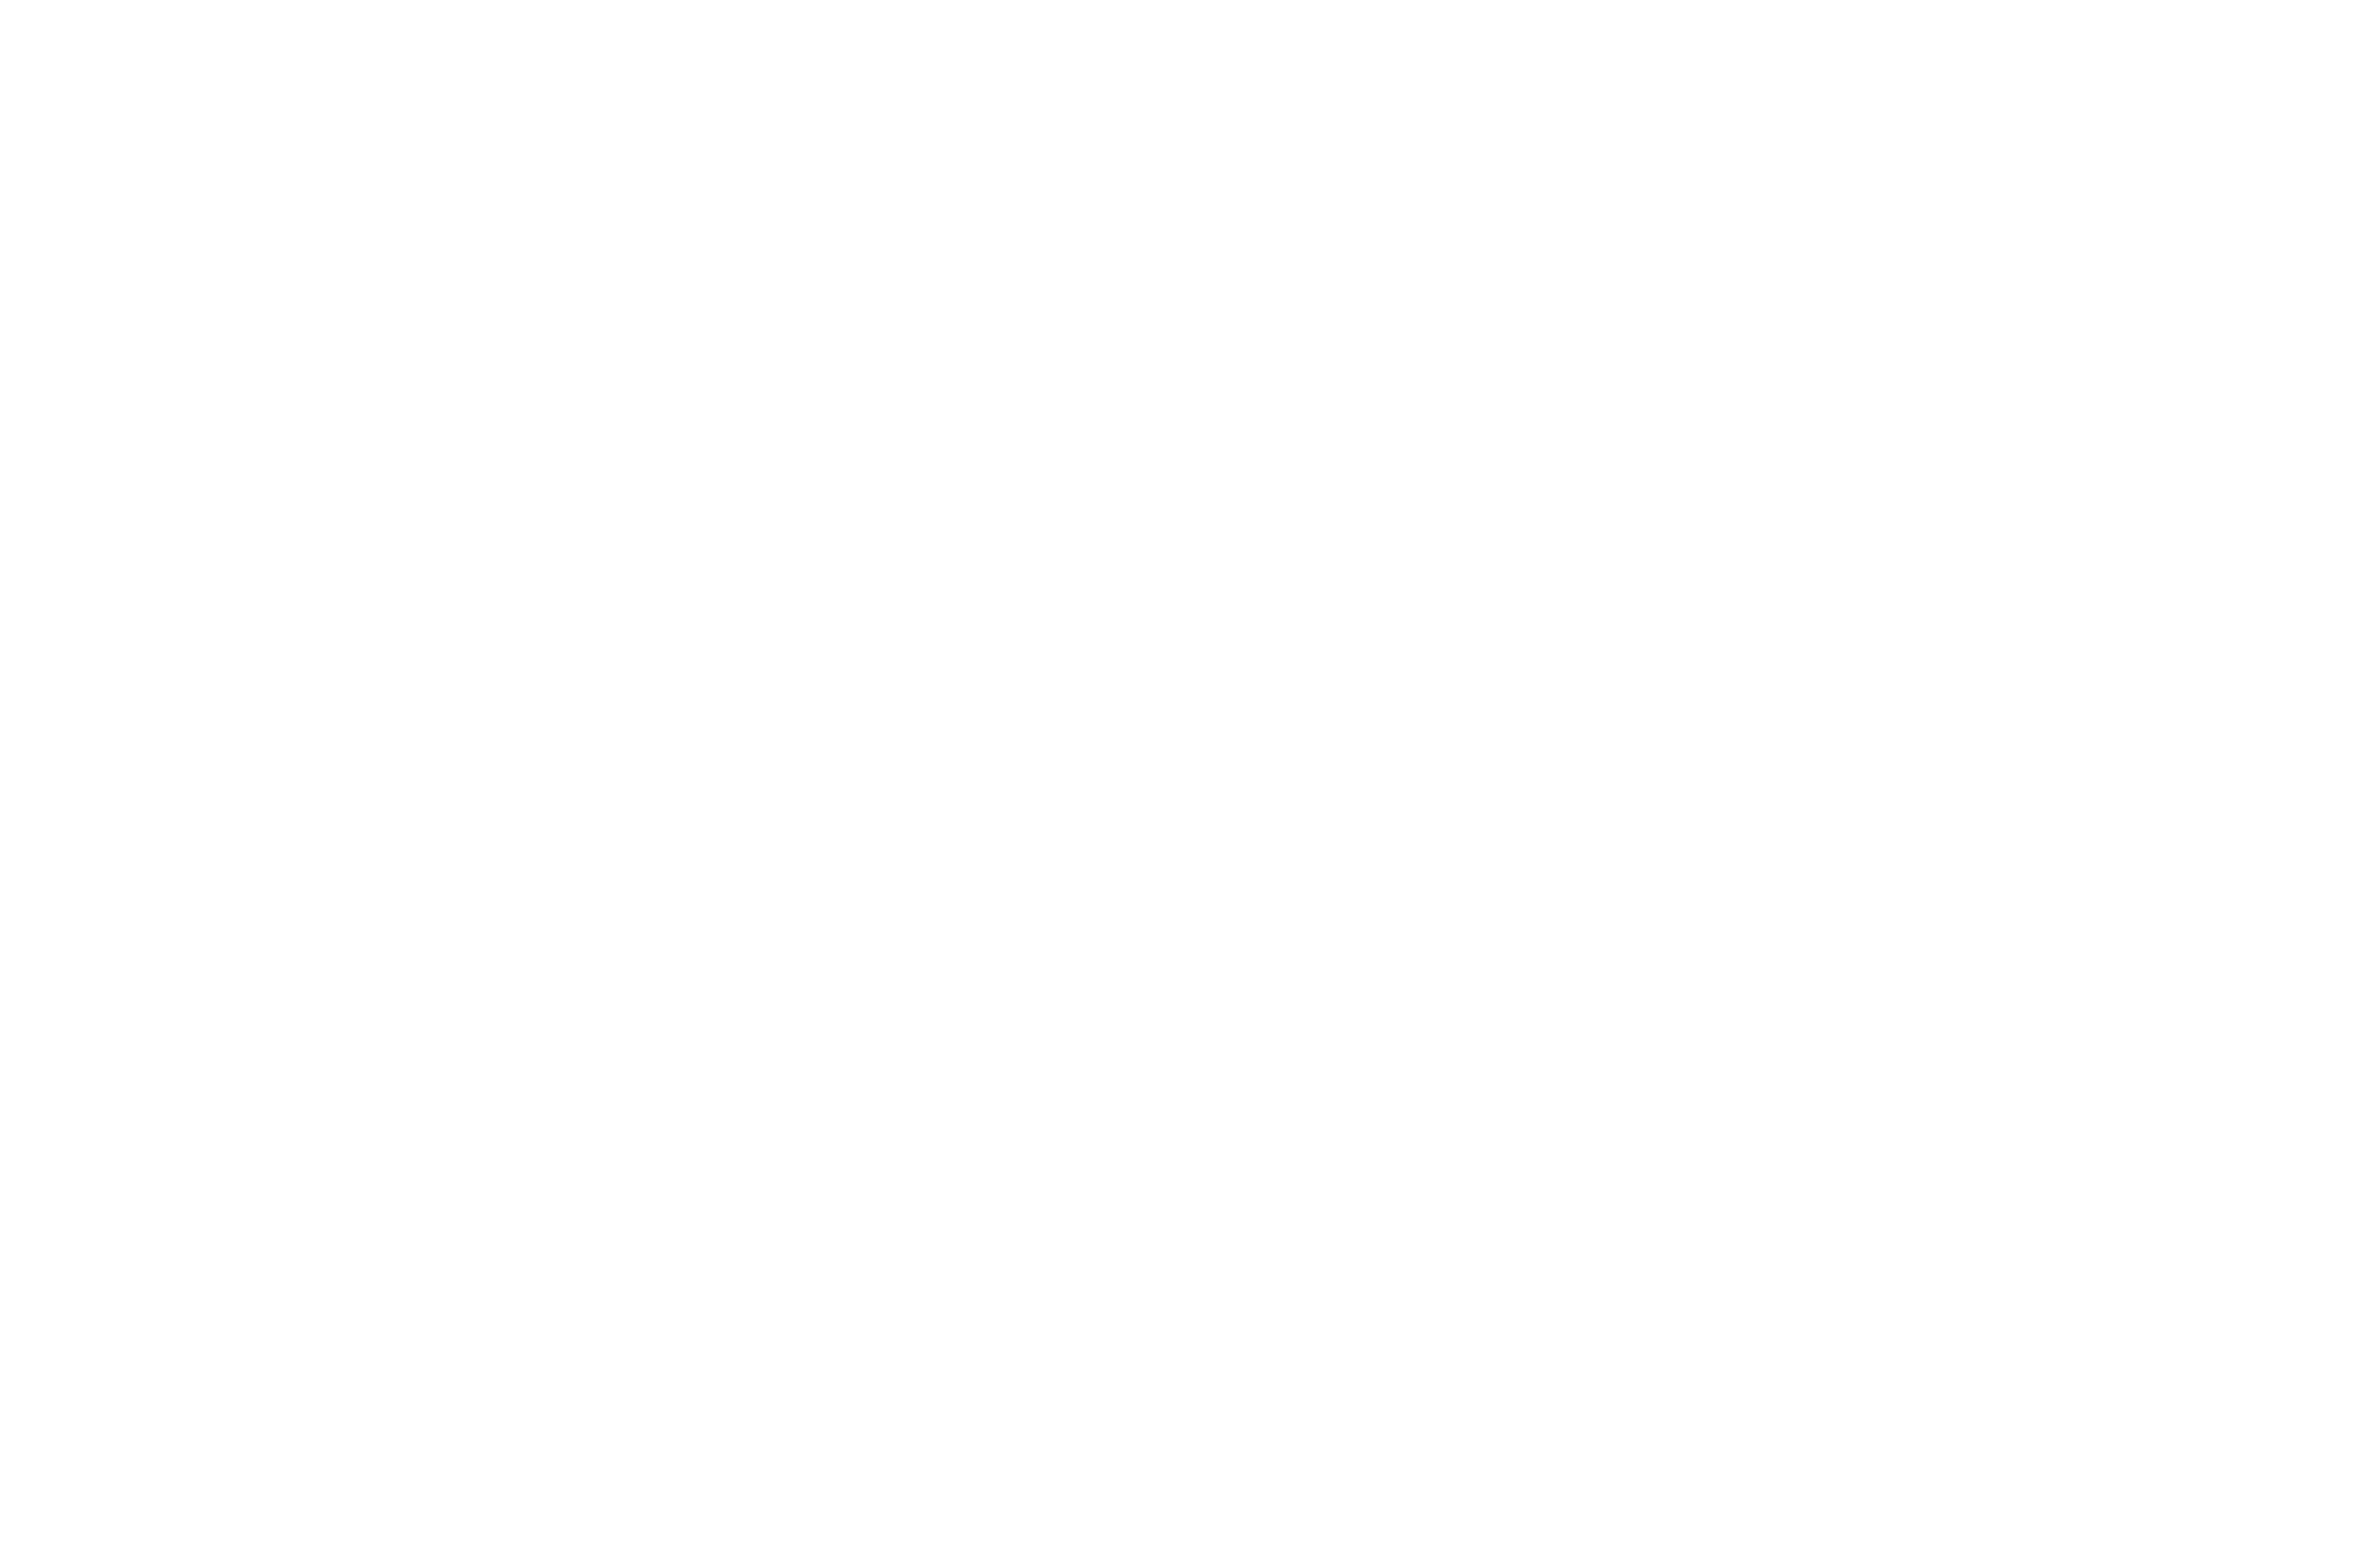 IPM Model Management